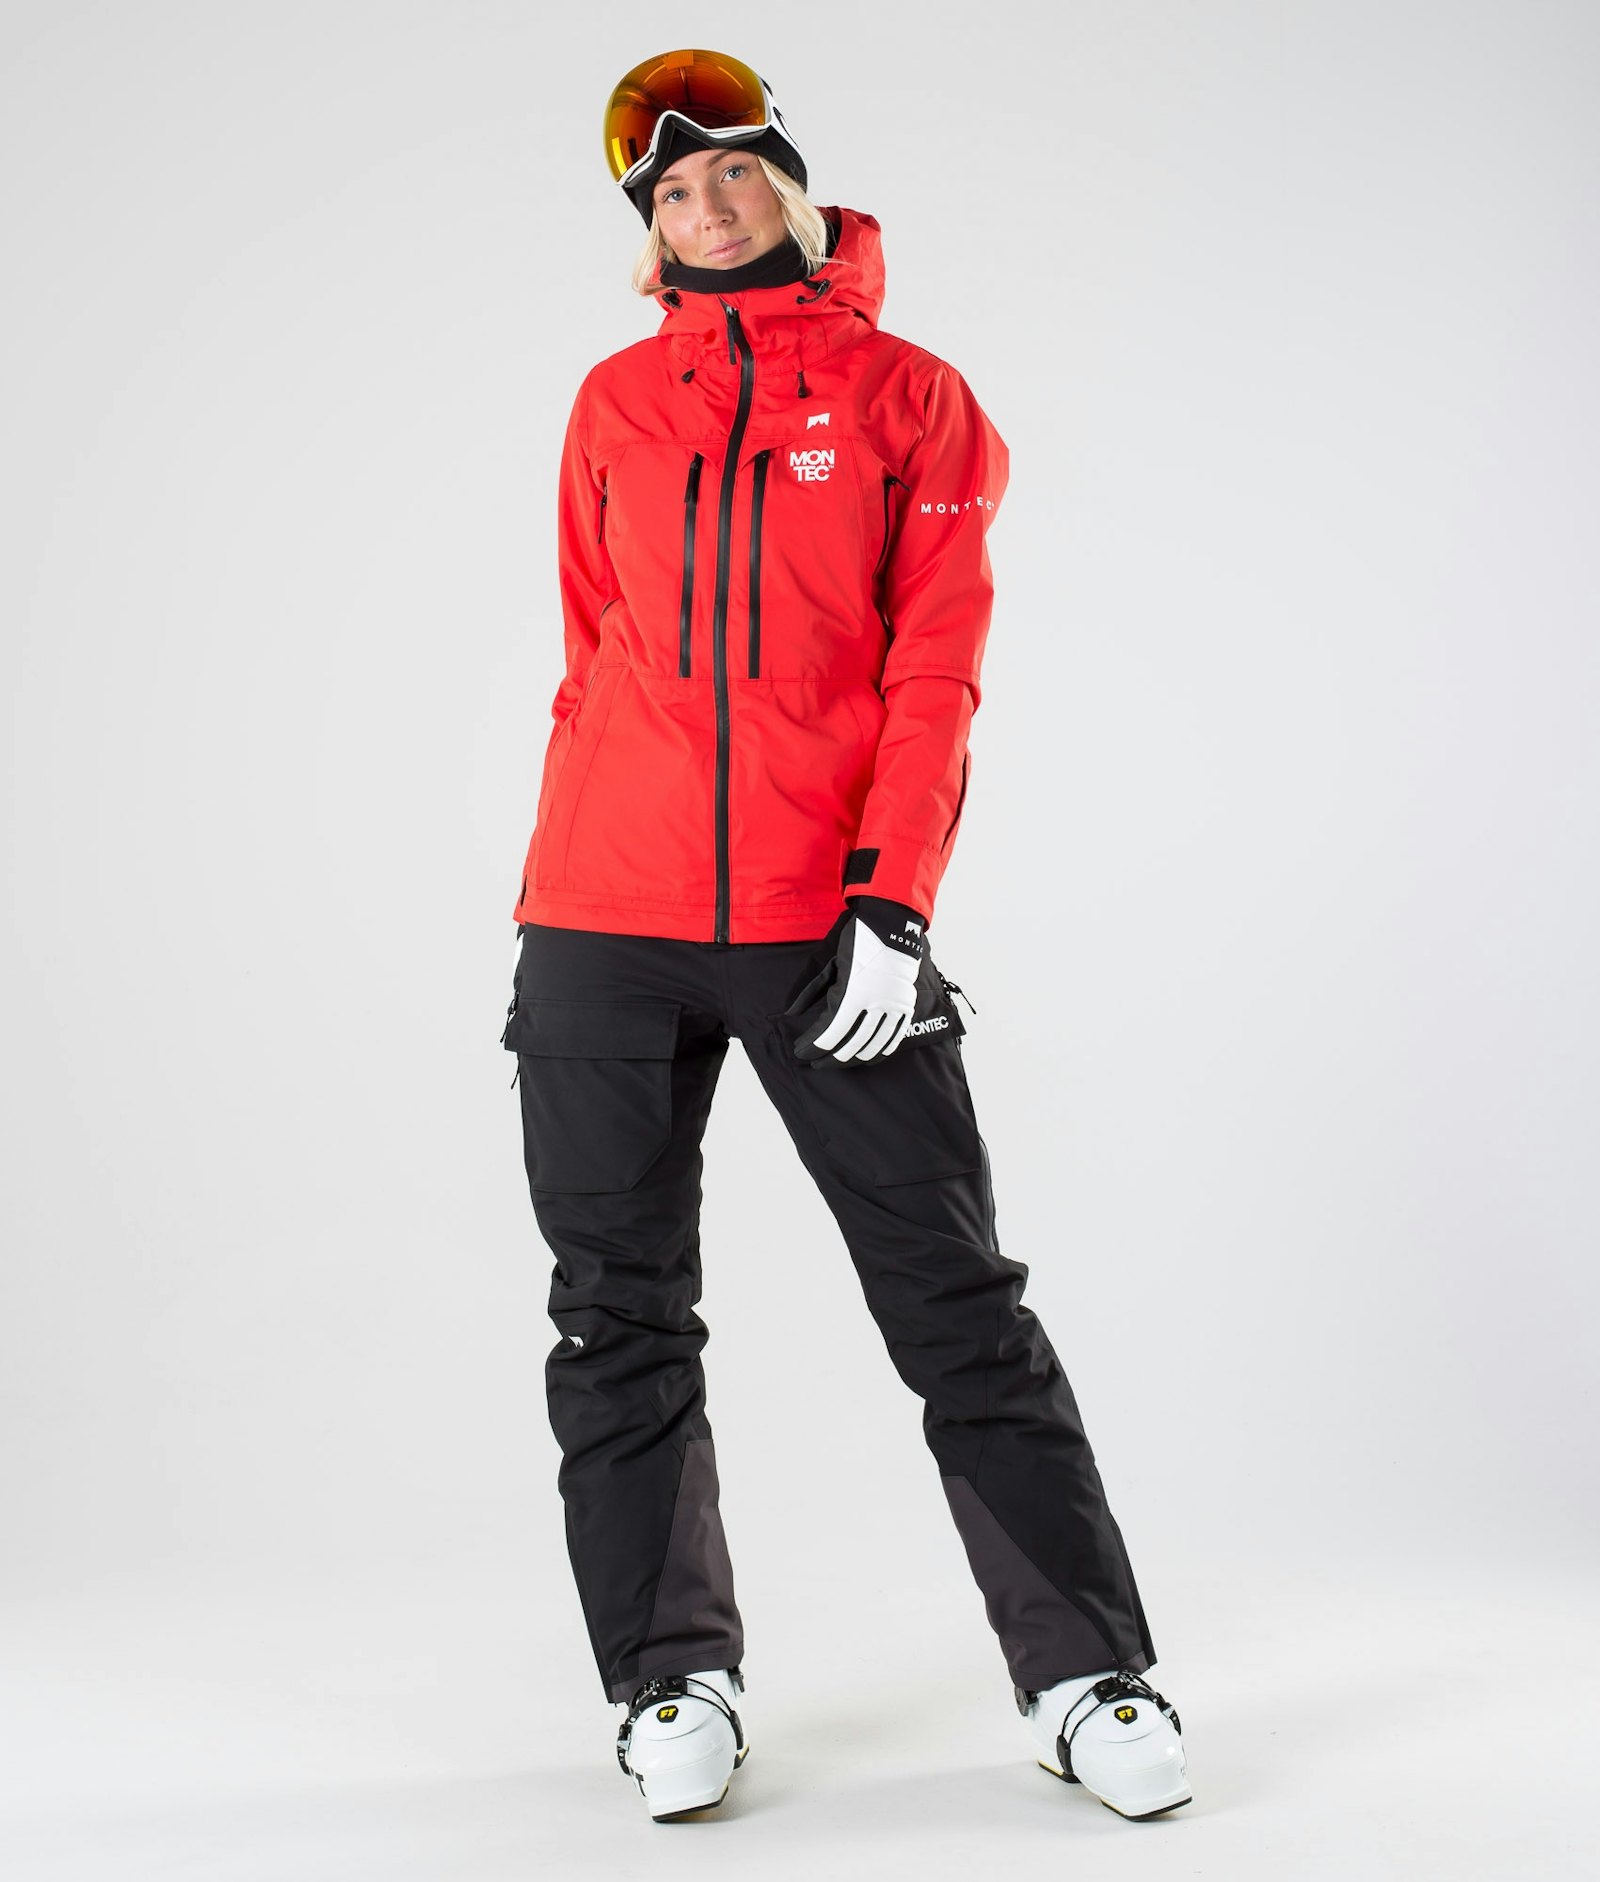 Moss W 2019 Skijacke Damen Red